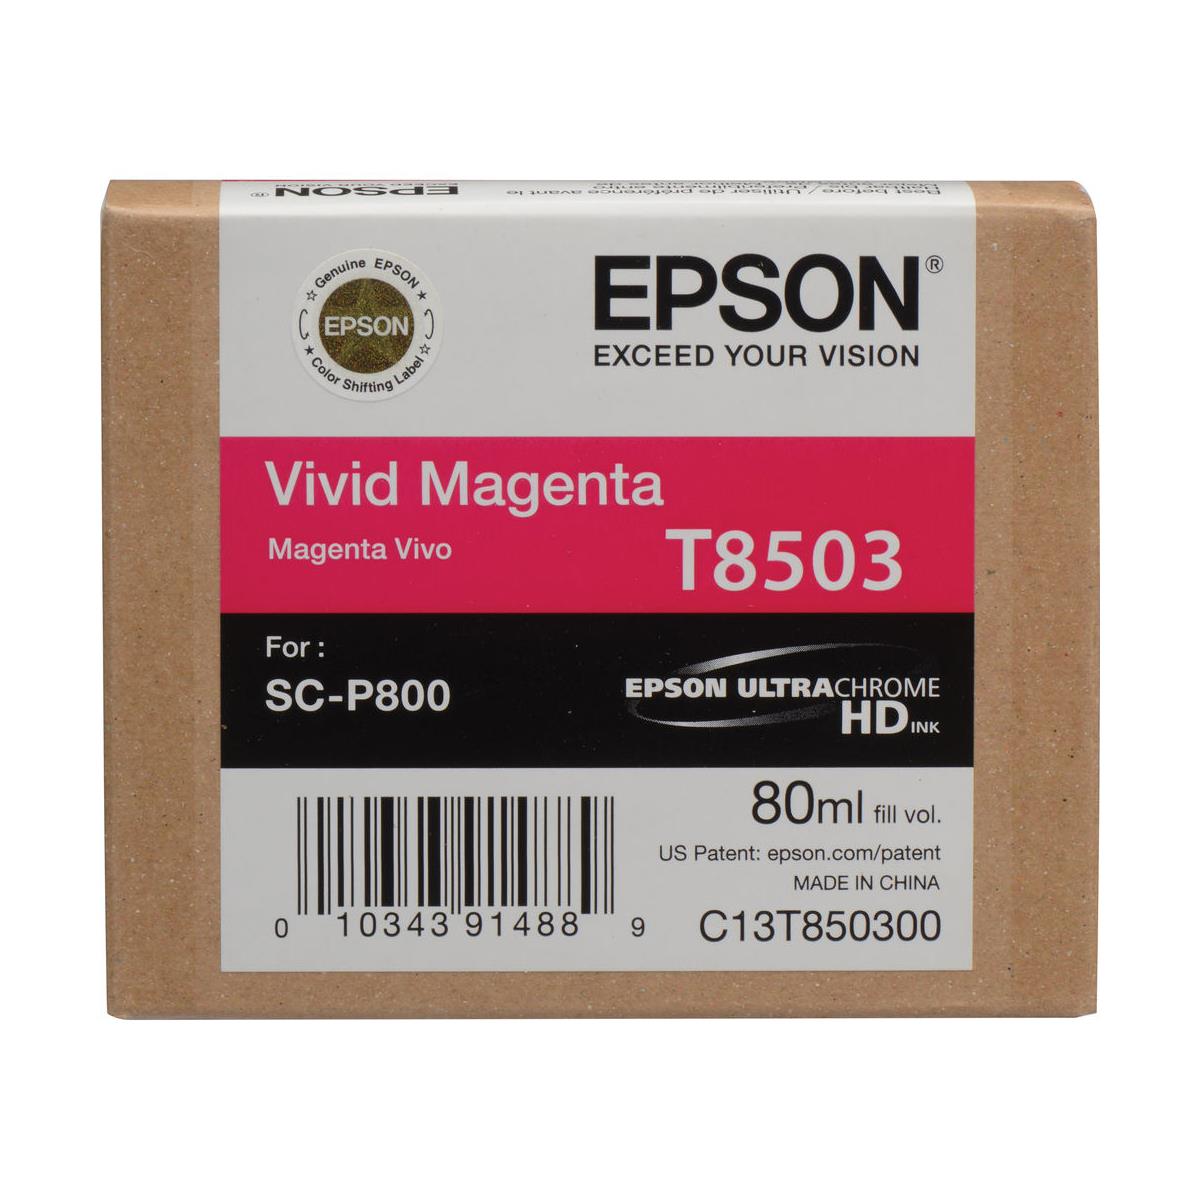 Epson T850300 UltraChrome HD Vivid Magen Vivid Magenta Ink Cartridge (80 ml)